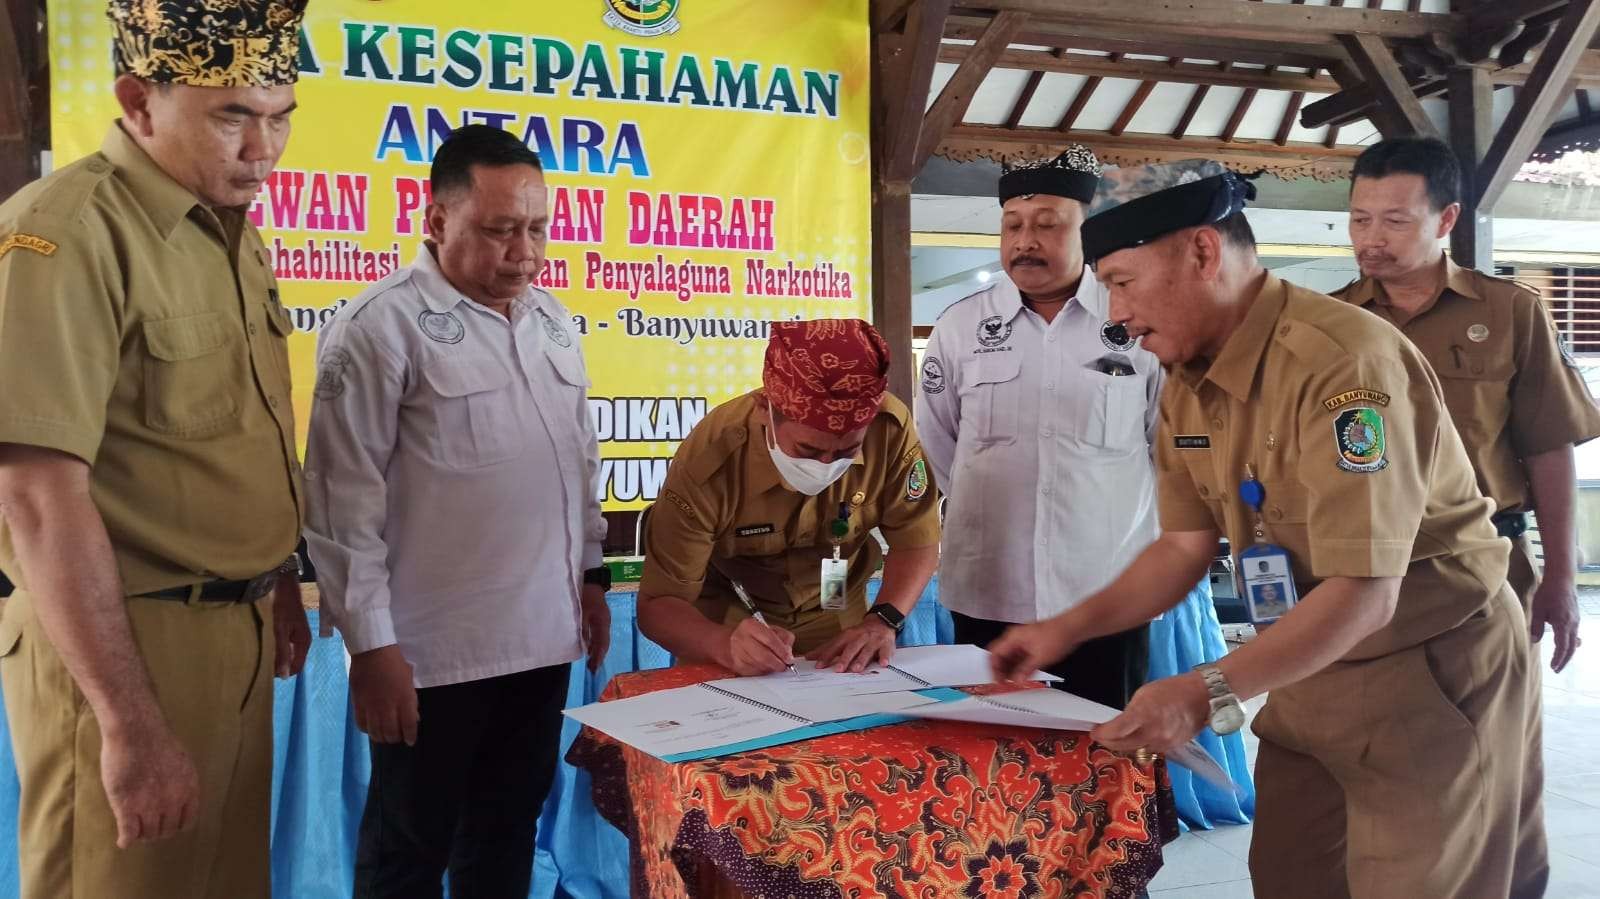 Pelaksana Tugas Kepala Dinas Pendidikan Banyuwangi, Suratno, menandatangani nota kesepahaman dengan Lembaga Rehabilitasi Pencegahan Penanggulangan Narkotika Banyuwangi (Foto: Muh Hujaini/Ngopibareng.id)